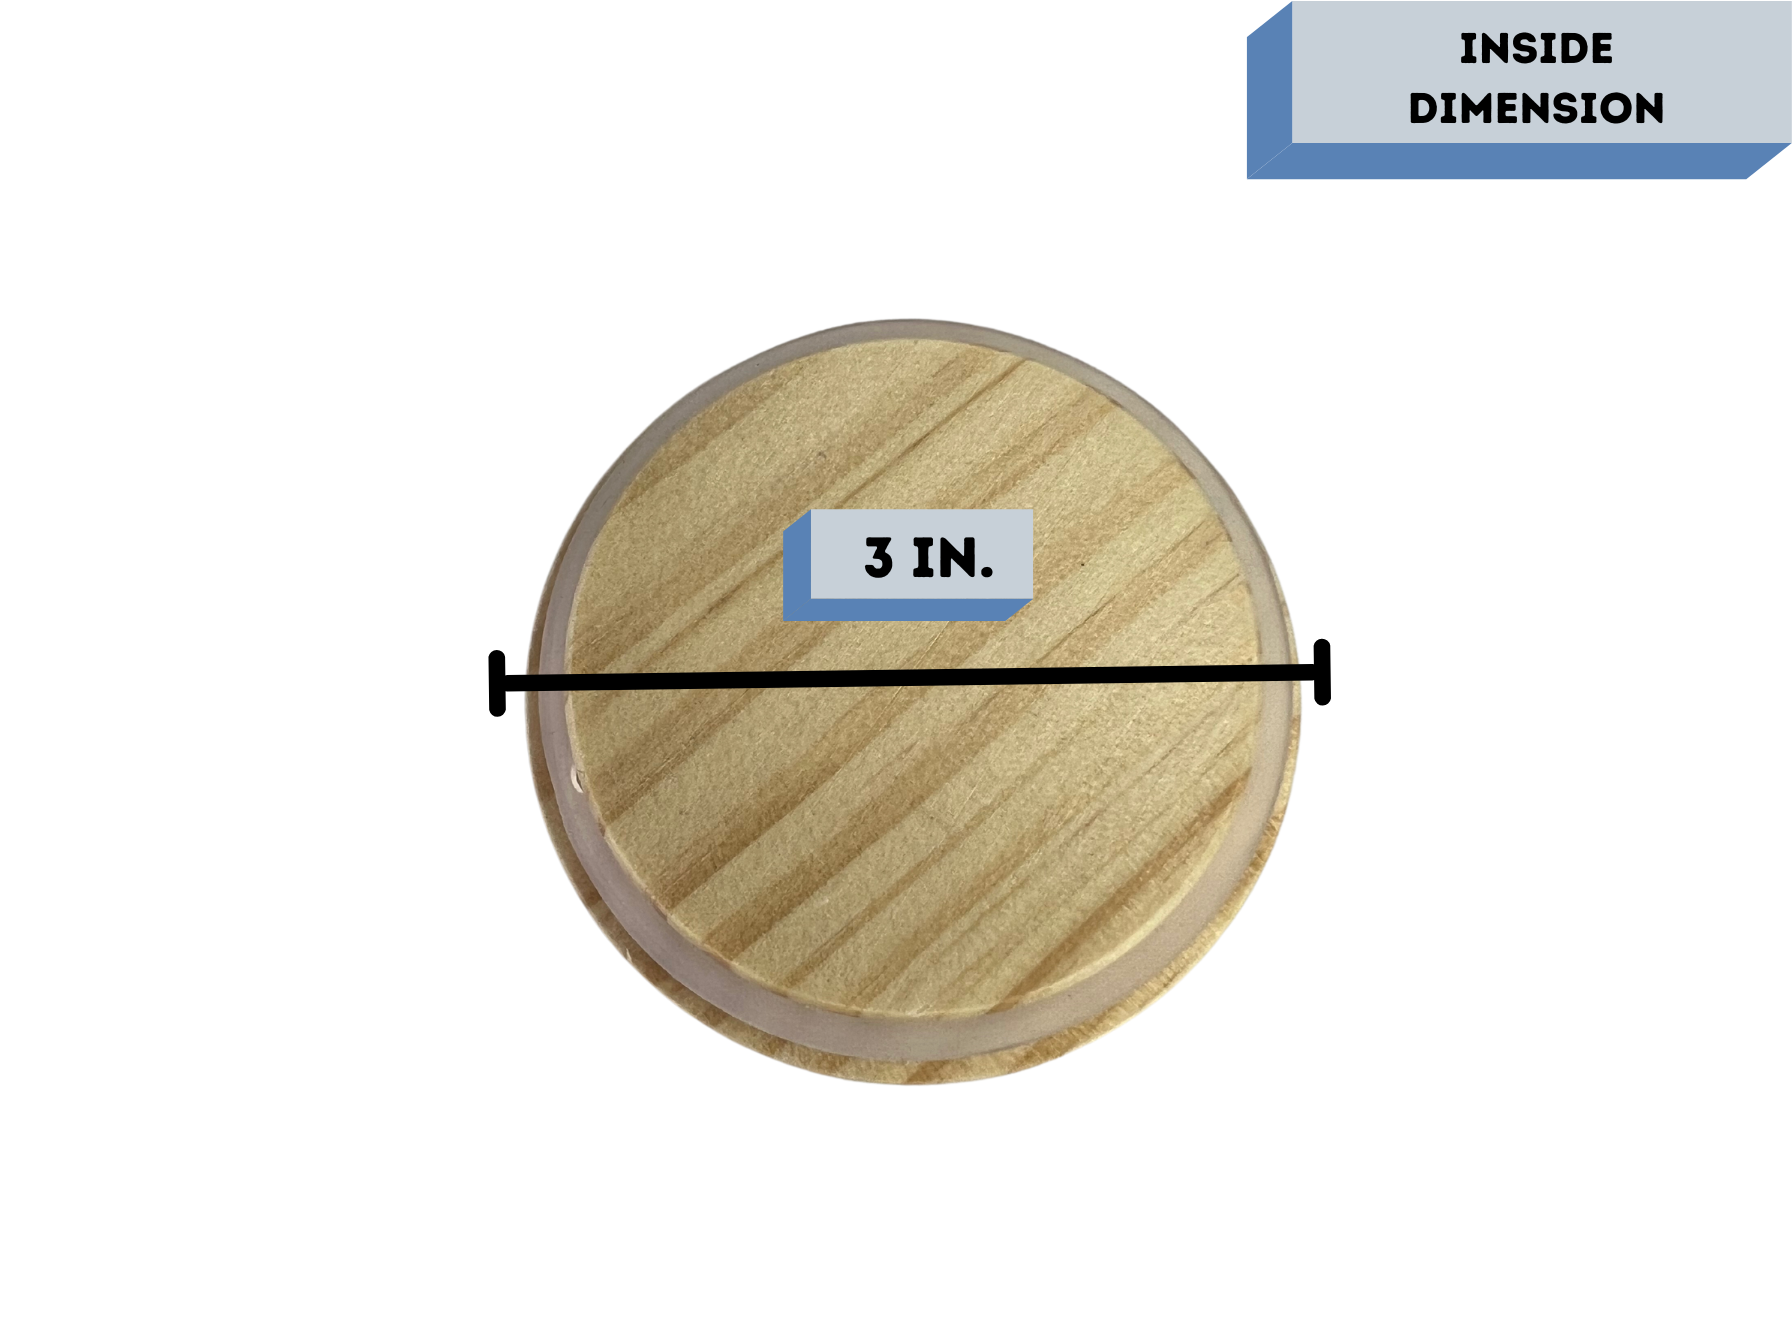 Monticiano Gloss Coated Wood Lids measurements